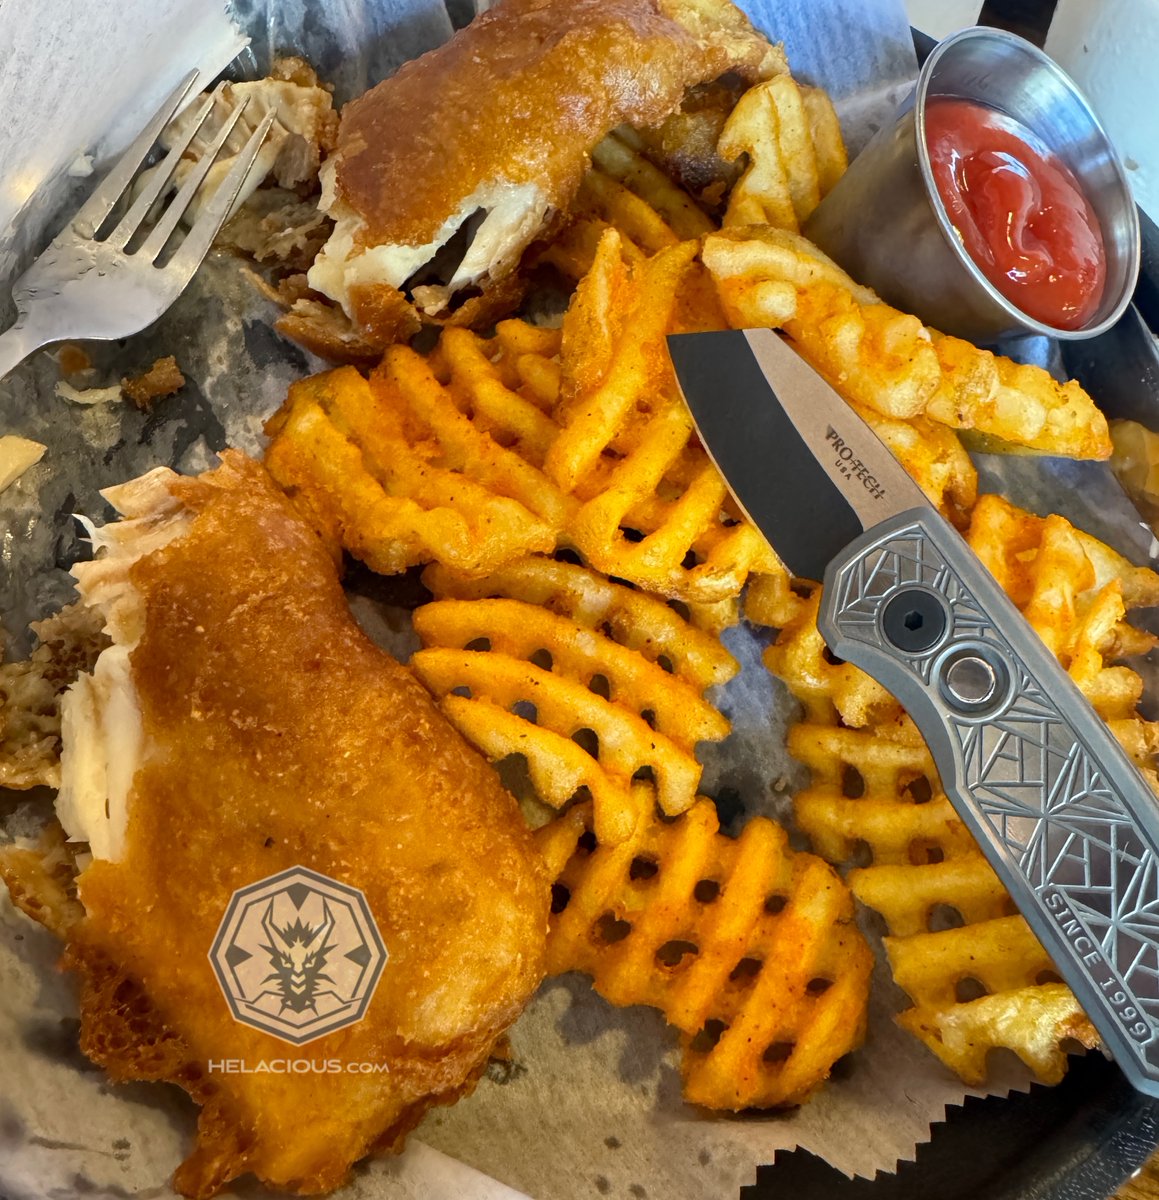 Fish & Chips & Runt!  Whats for dinner tonight? #knifepics
#helacious #helaciousblades #edc #edccommunity #edccarry  #edcgear #knifelife  #knifemom #lakewylie #yorkcounty #pocketdump #everyday_tactical